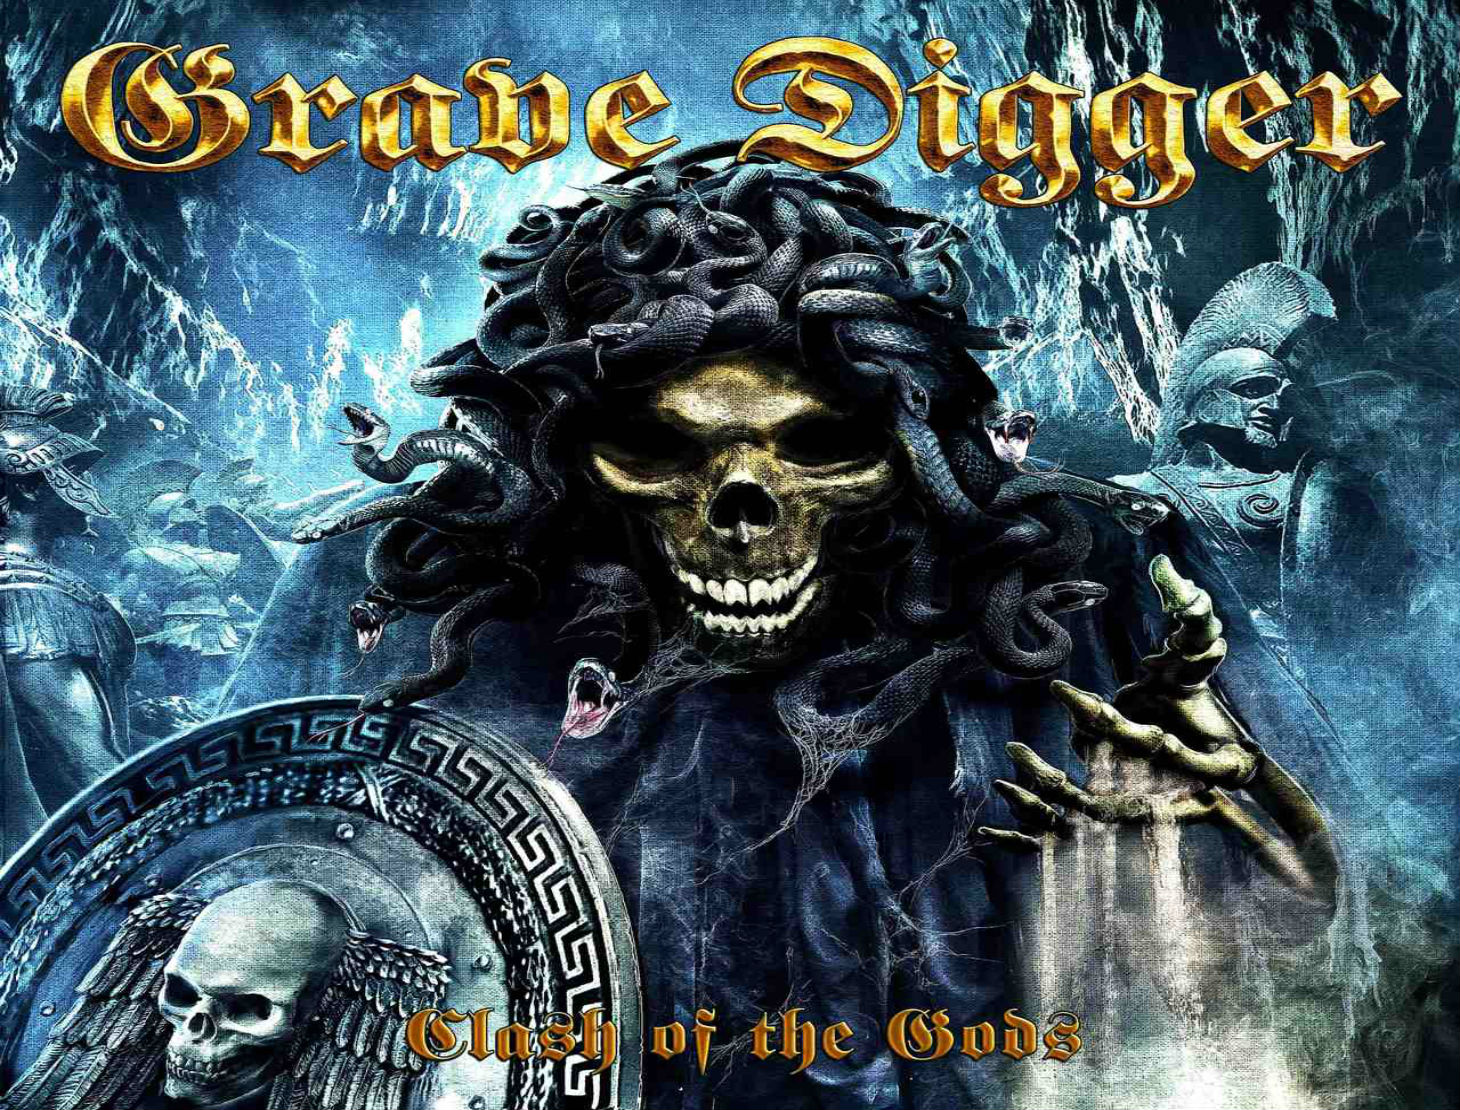 Digger Heavy Metal Album Art Cover Fantasy Dark S Wallpaper Background